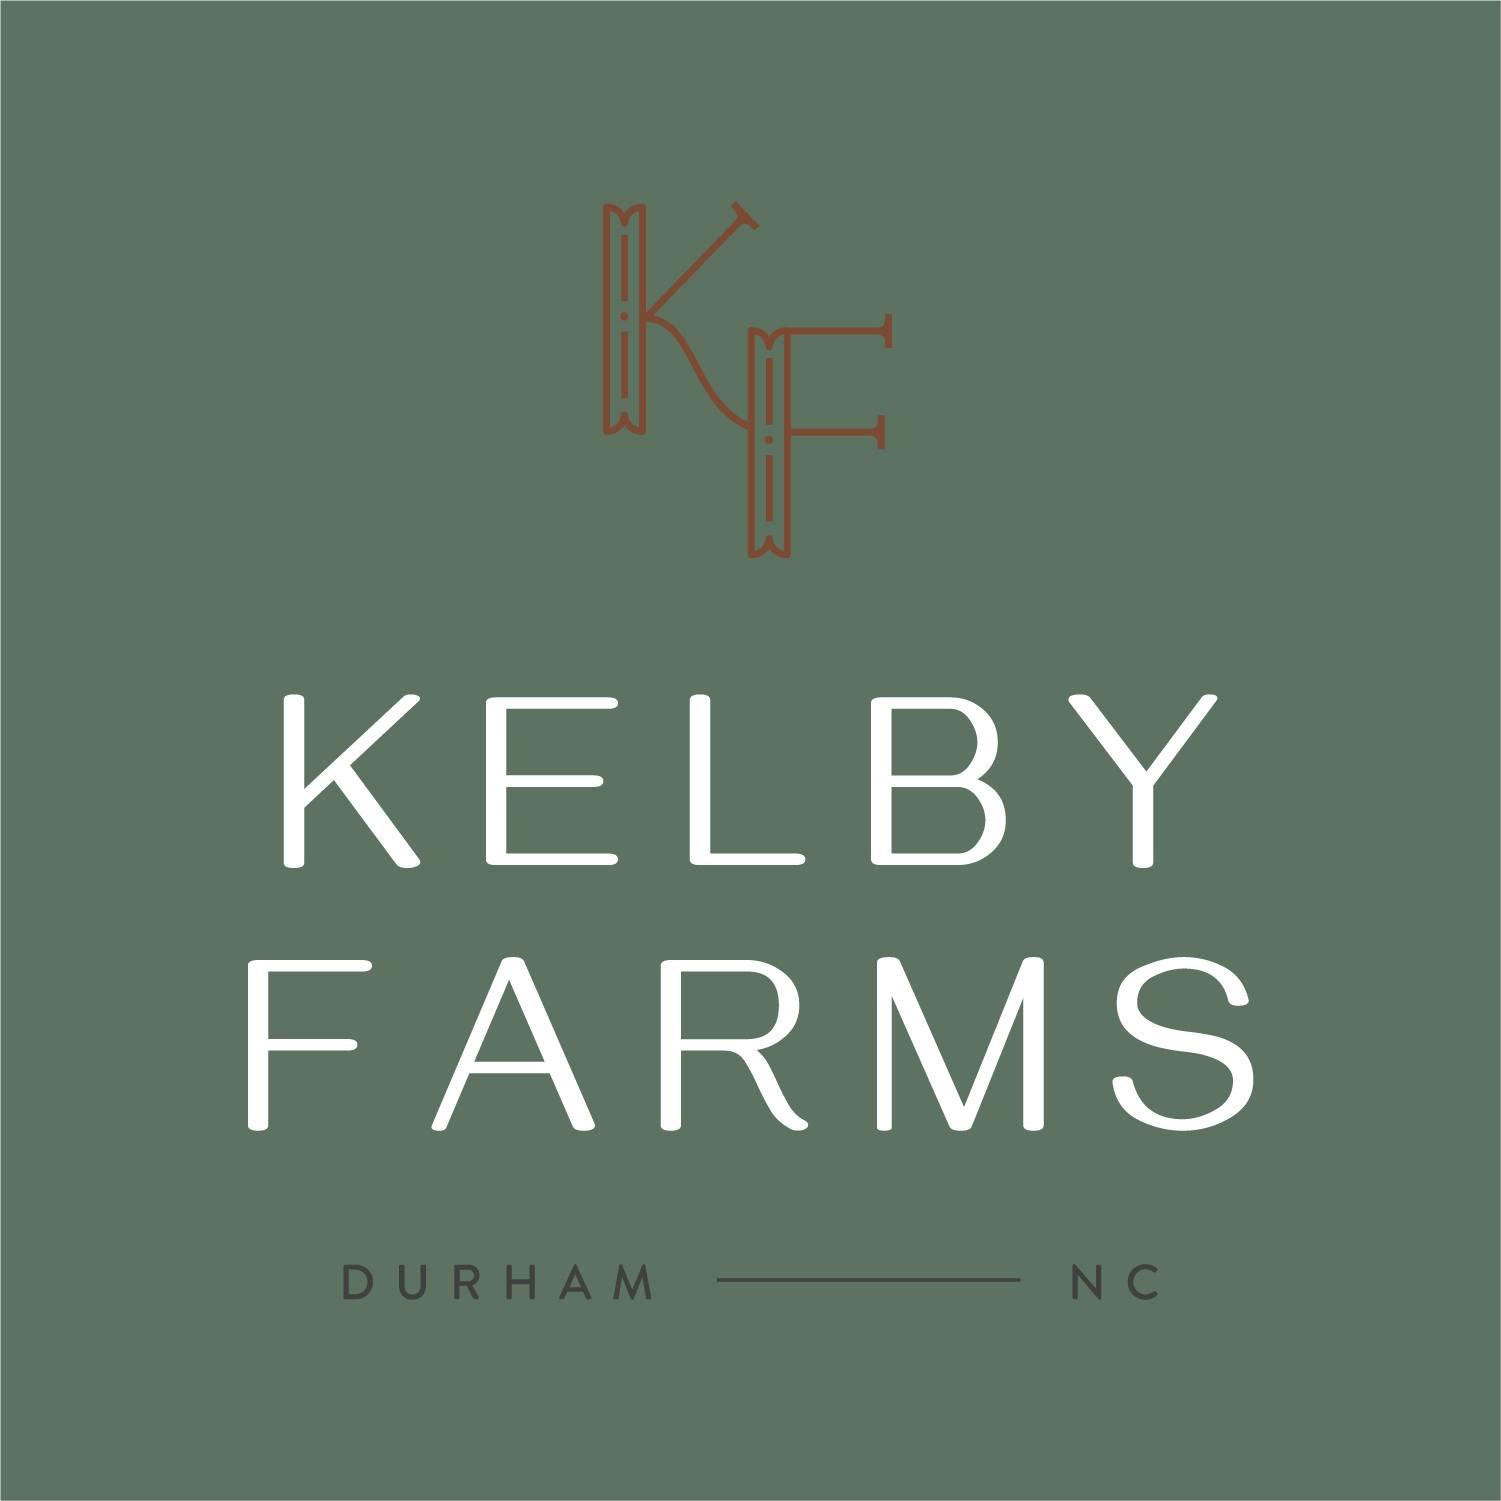 Kelby Farms Apartments - Durham, NC 27707 - (919)980-9517 | ShowMeLocal.com